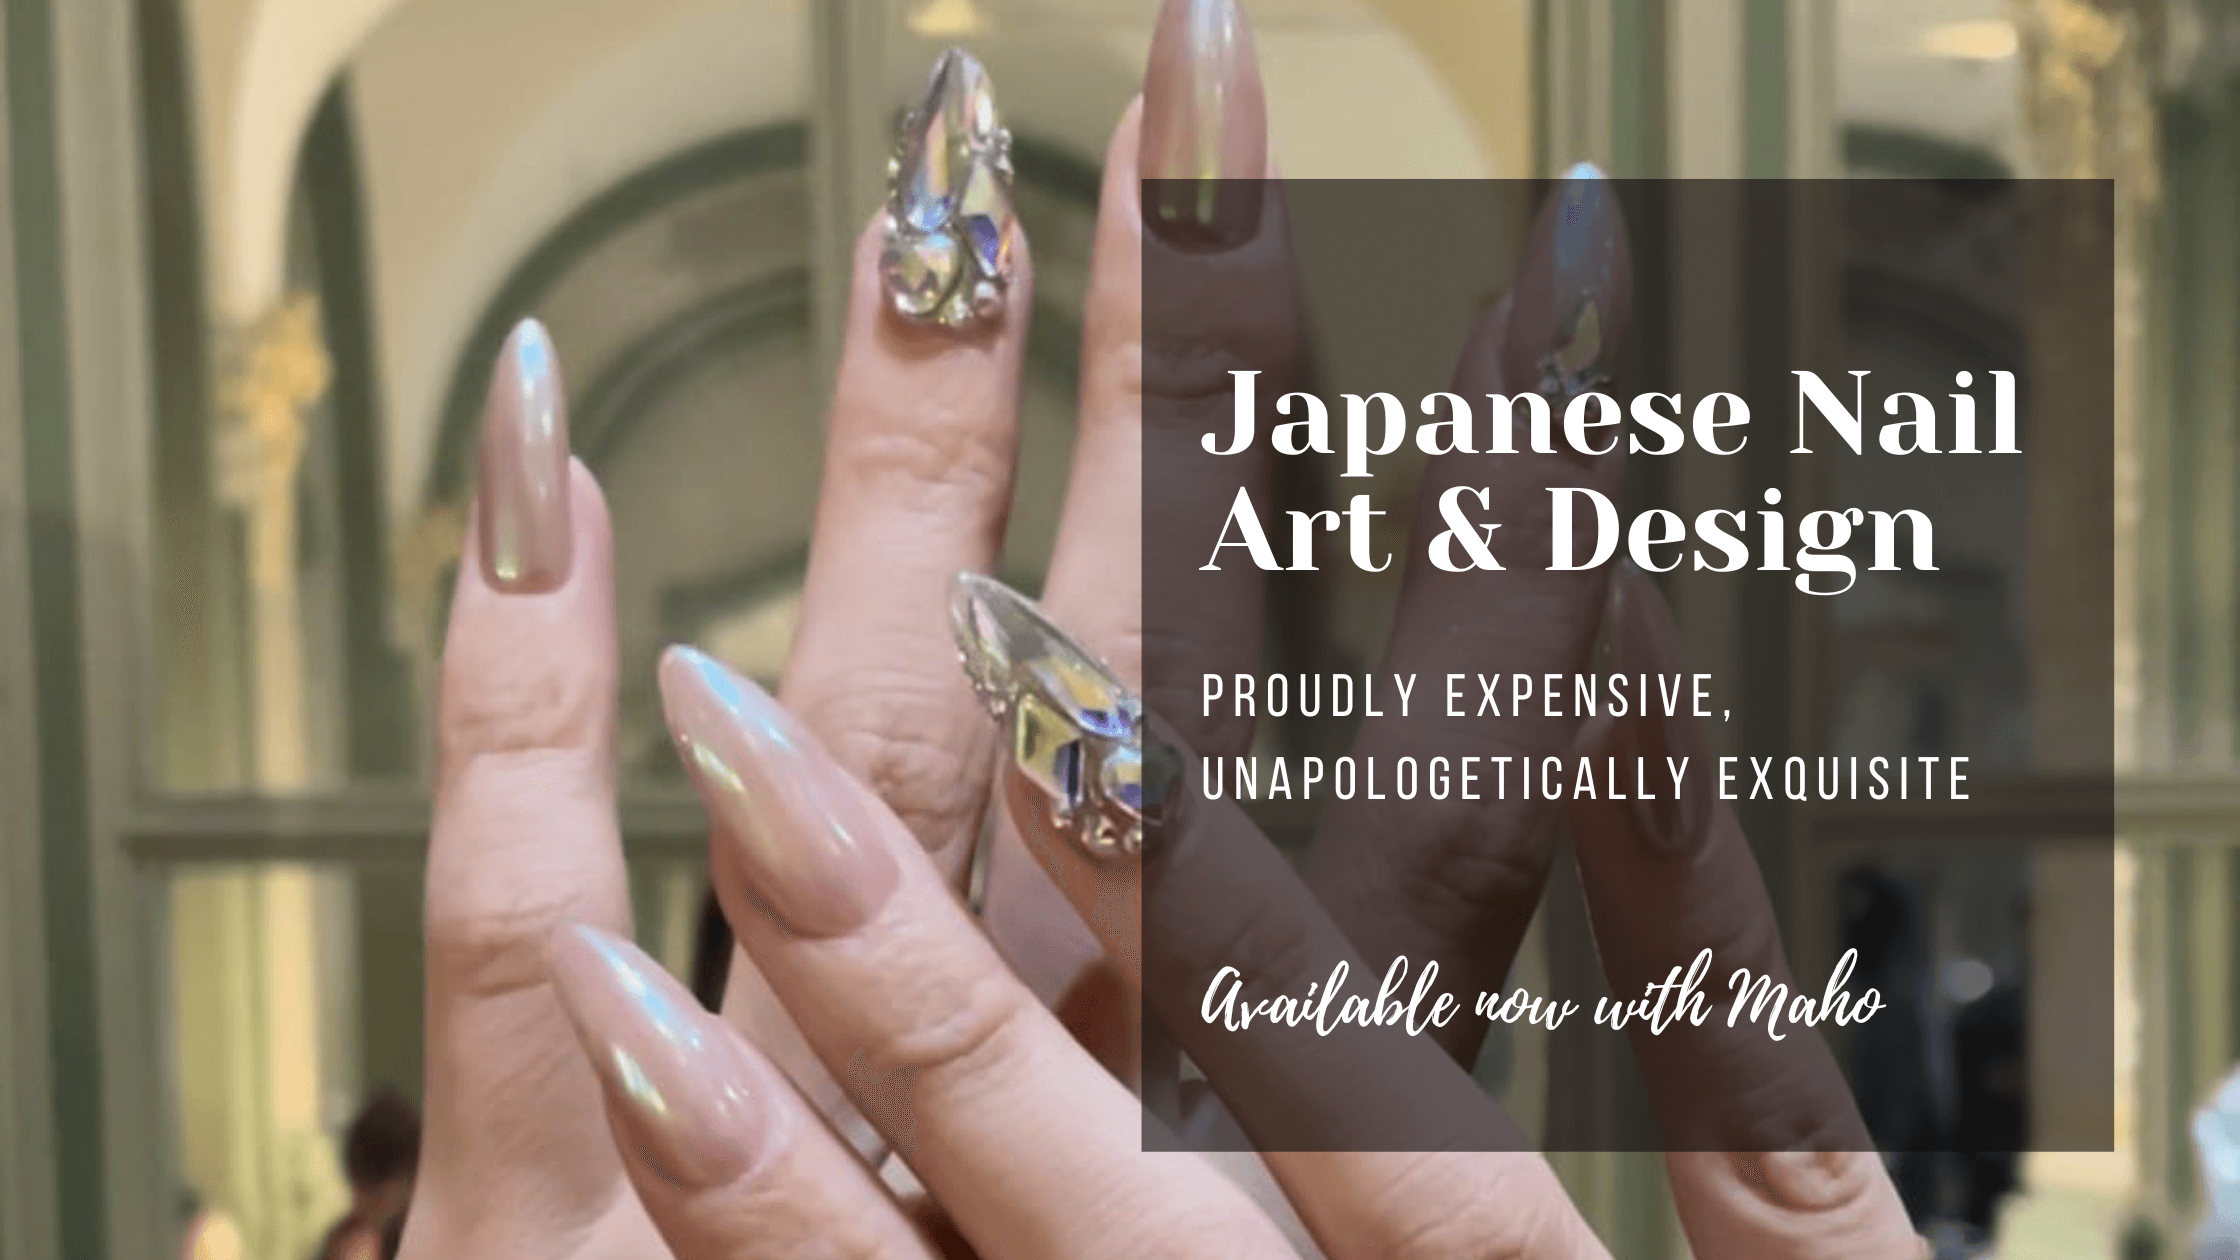 2. Japan Nail Art - wide 6